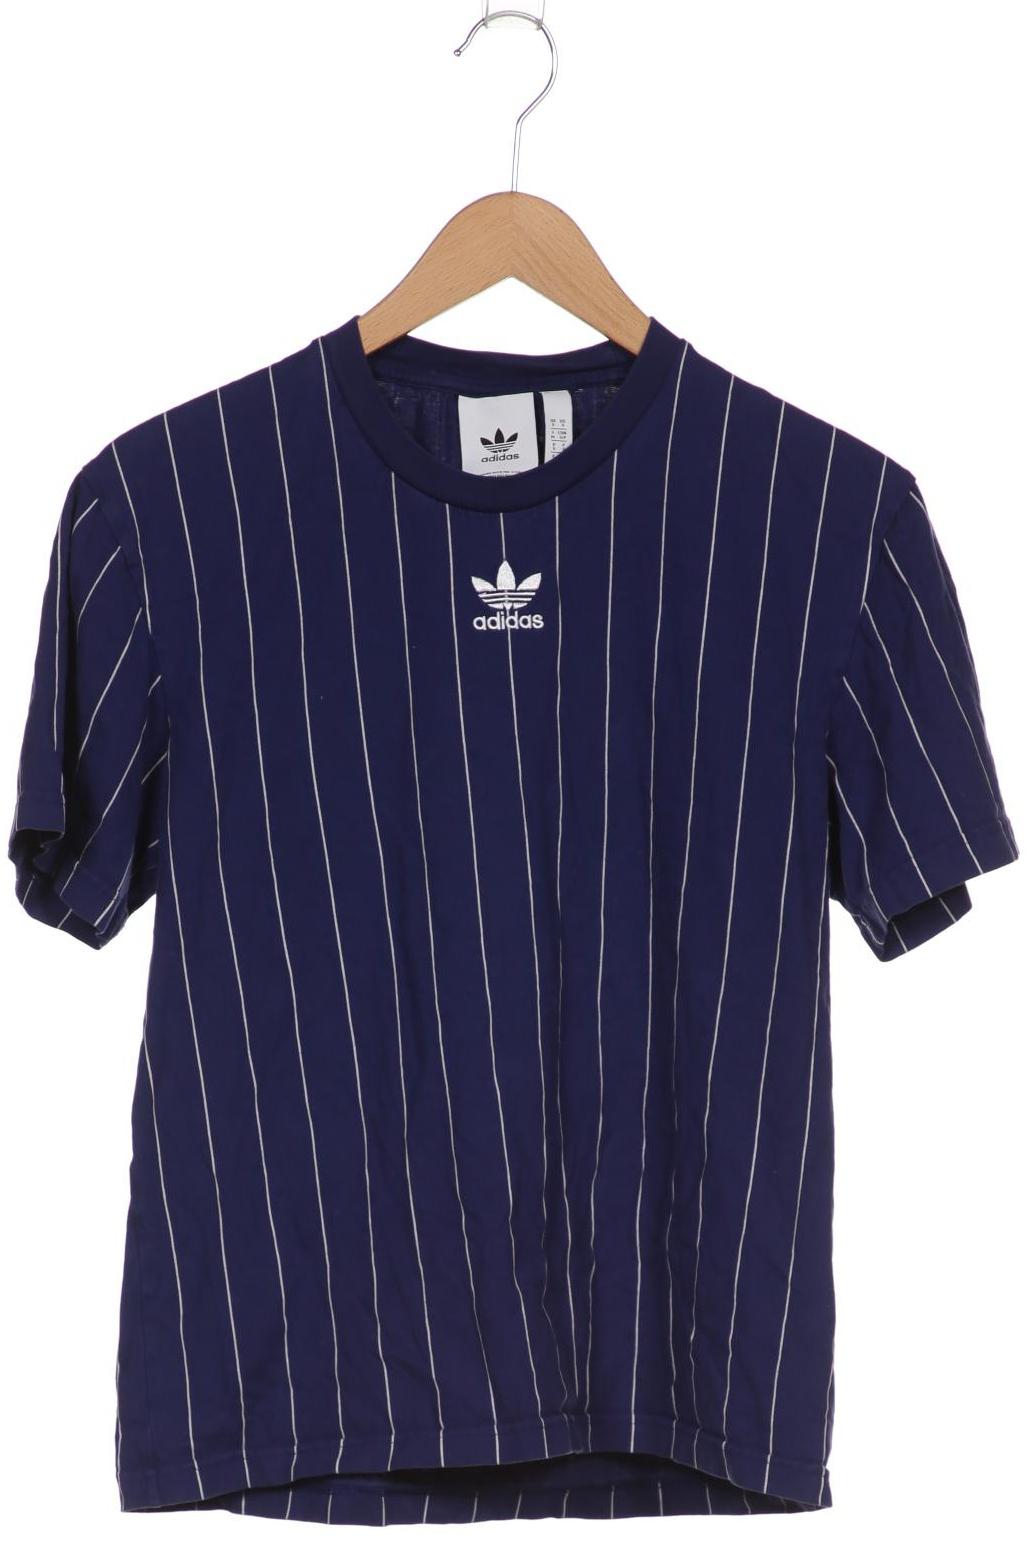 adidas Originals Herren T-Shirt, marineblau, Gr. 46 von adidas Originals